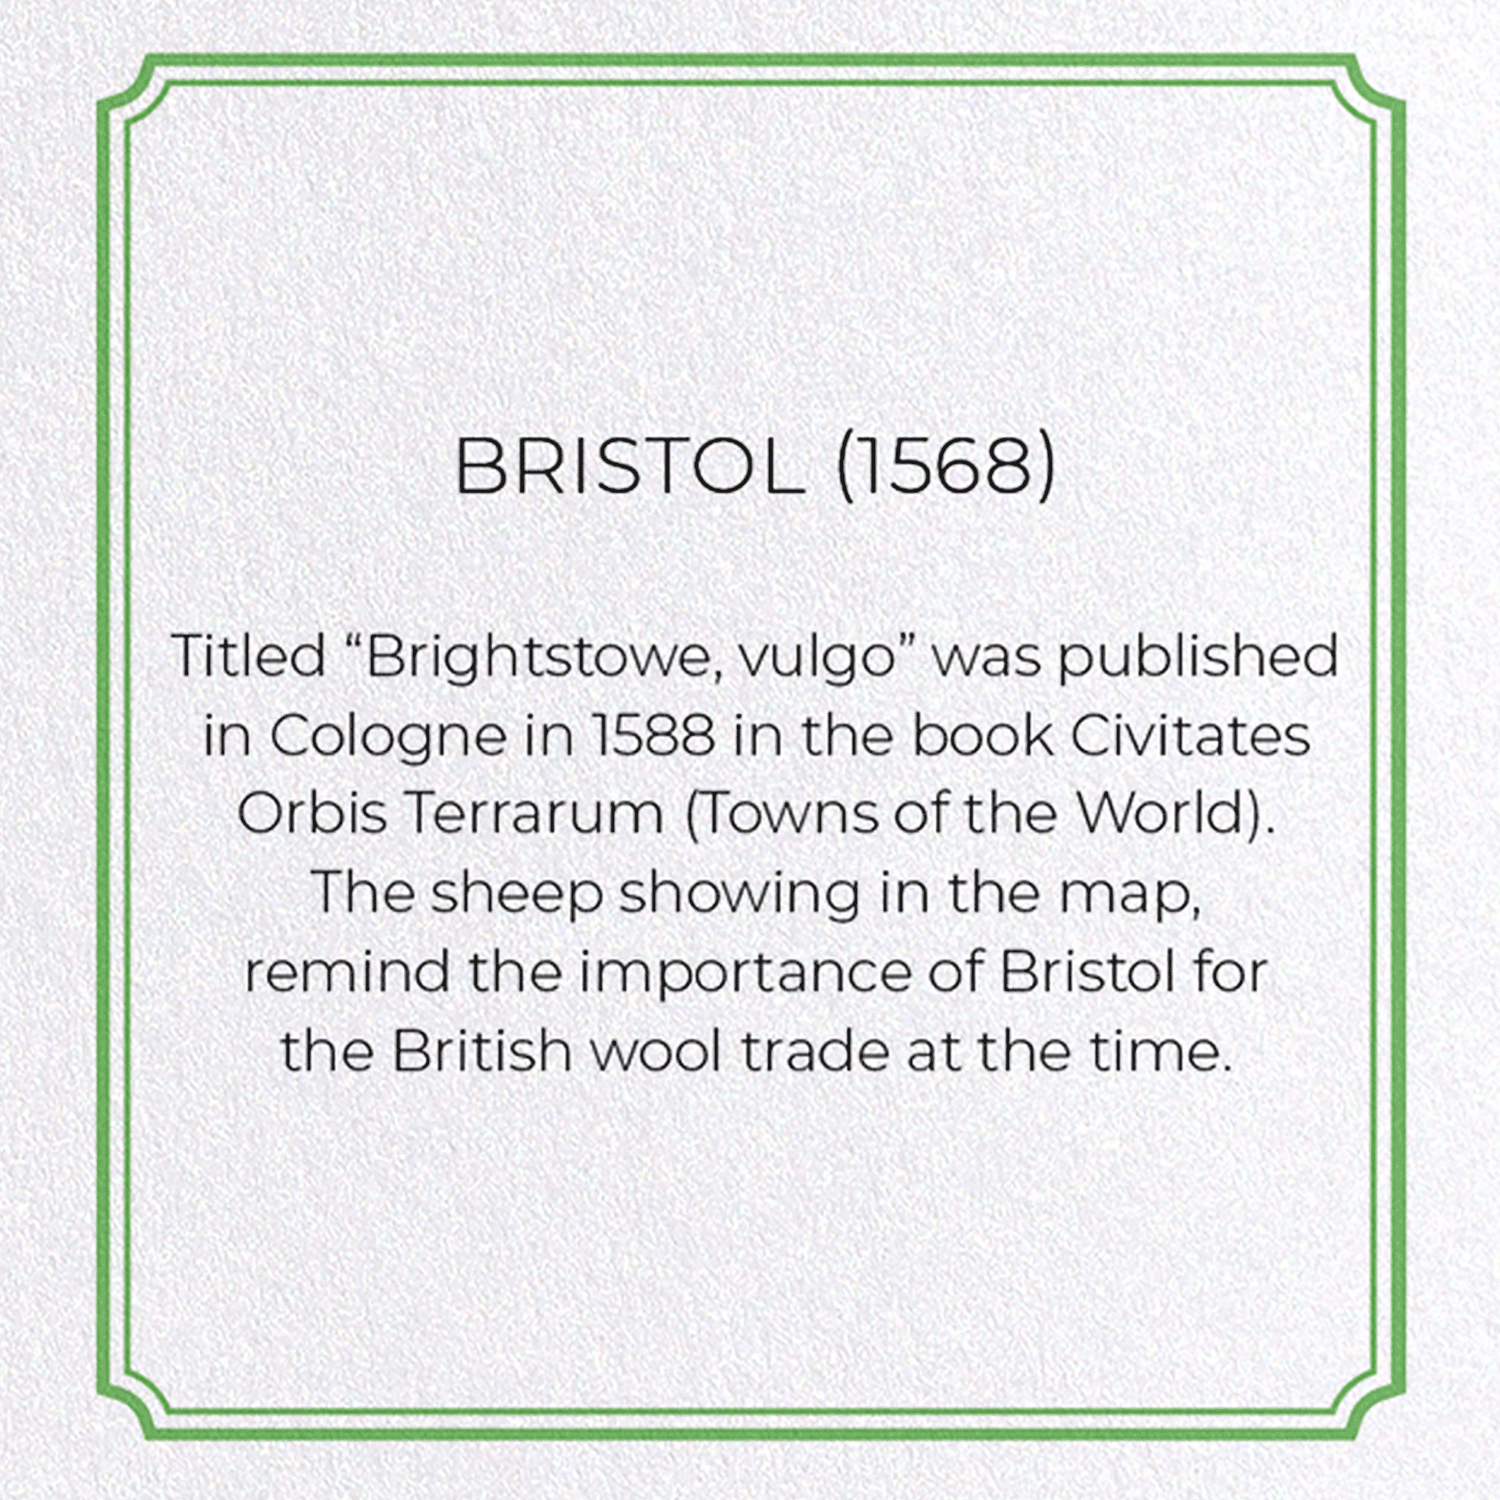 BRISTOL (1568)